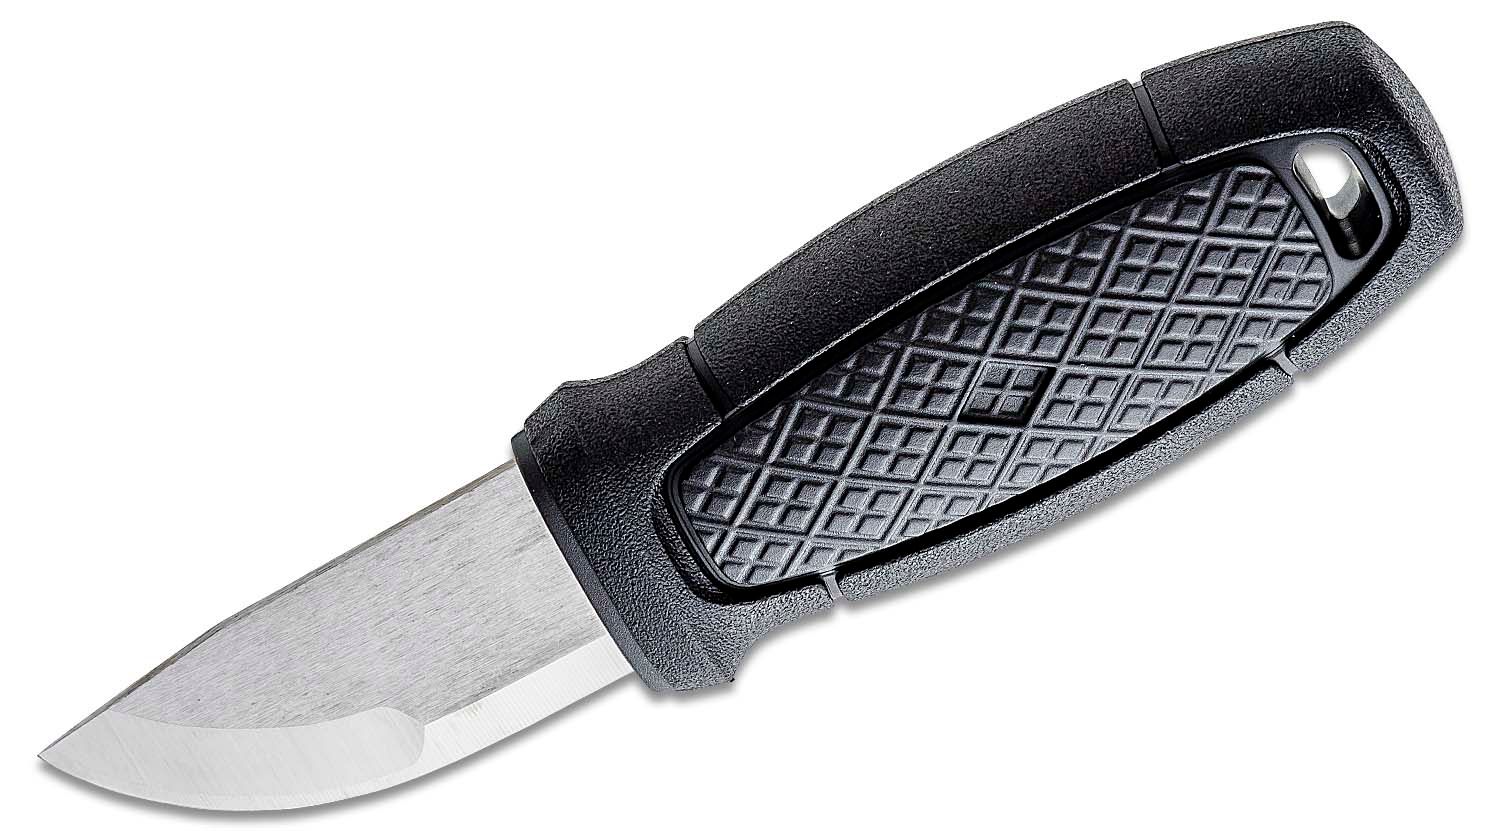 Morakniv Eldris Pocket-Size Fixed 2.2 12C27 Blade, Black Polypropylene  Handle, Plastic Sheath - KnifeCenter - M-12647